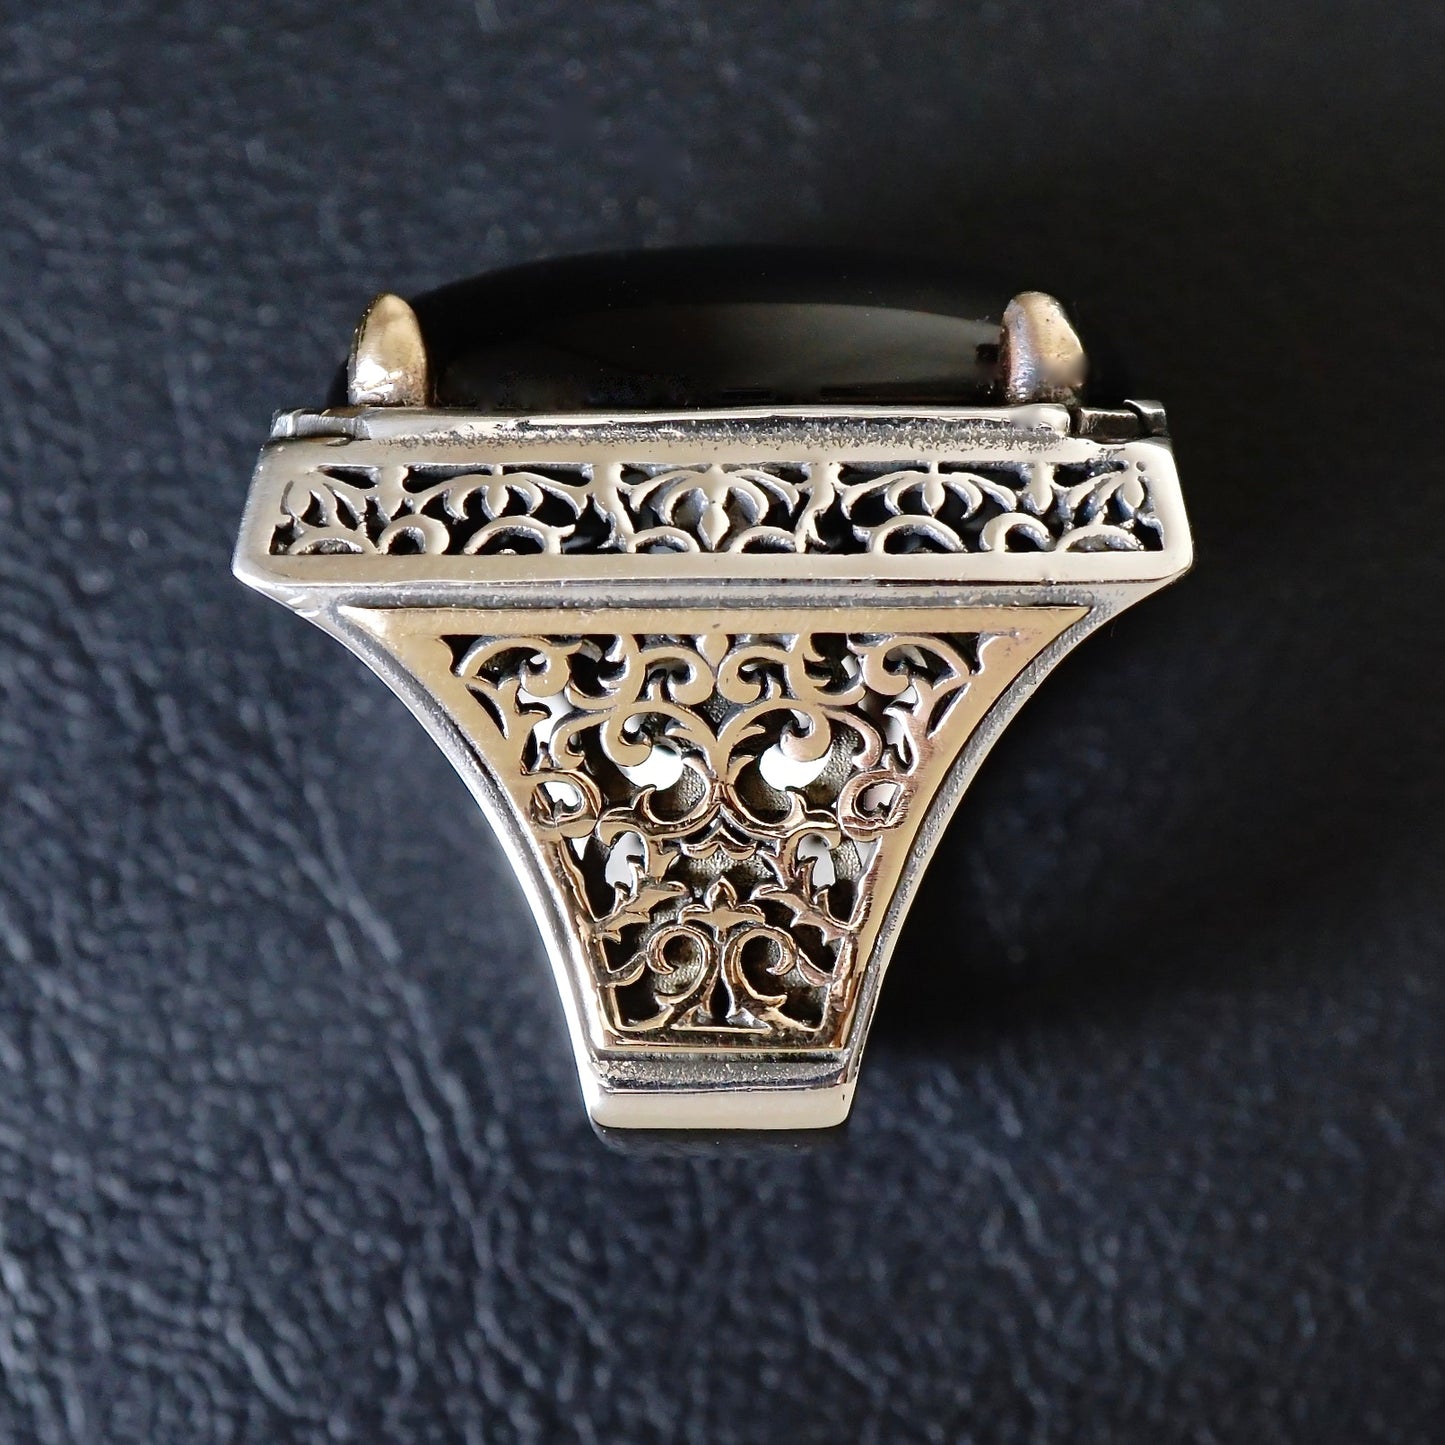 Black Onyx Mens Big Ring Heavy Solid Sterling Silver 925 Turkish Artisan Designer Jewelry